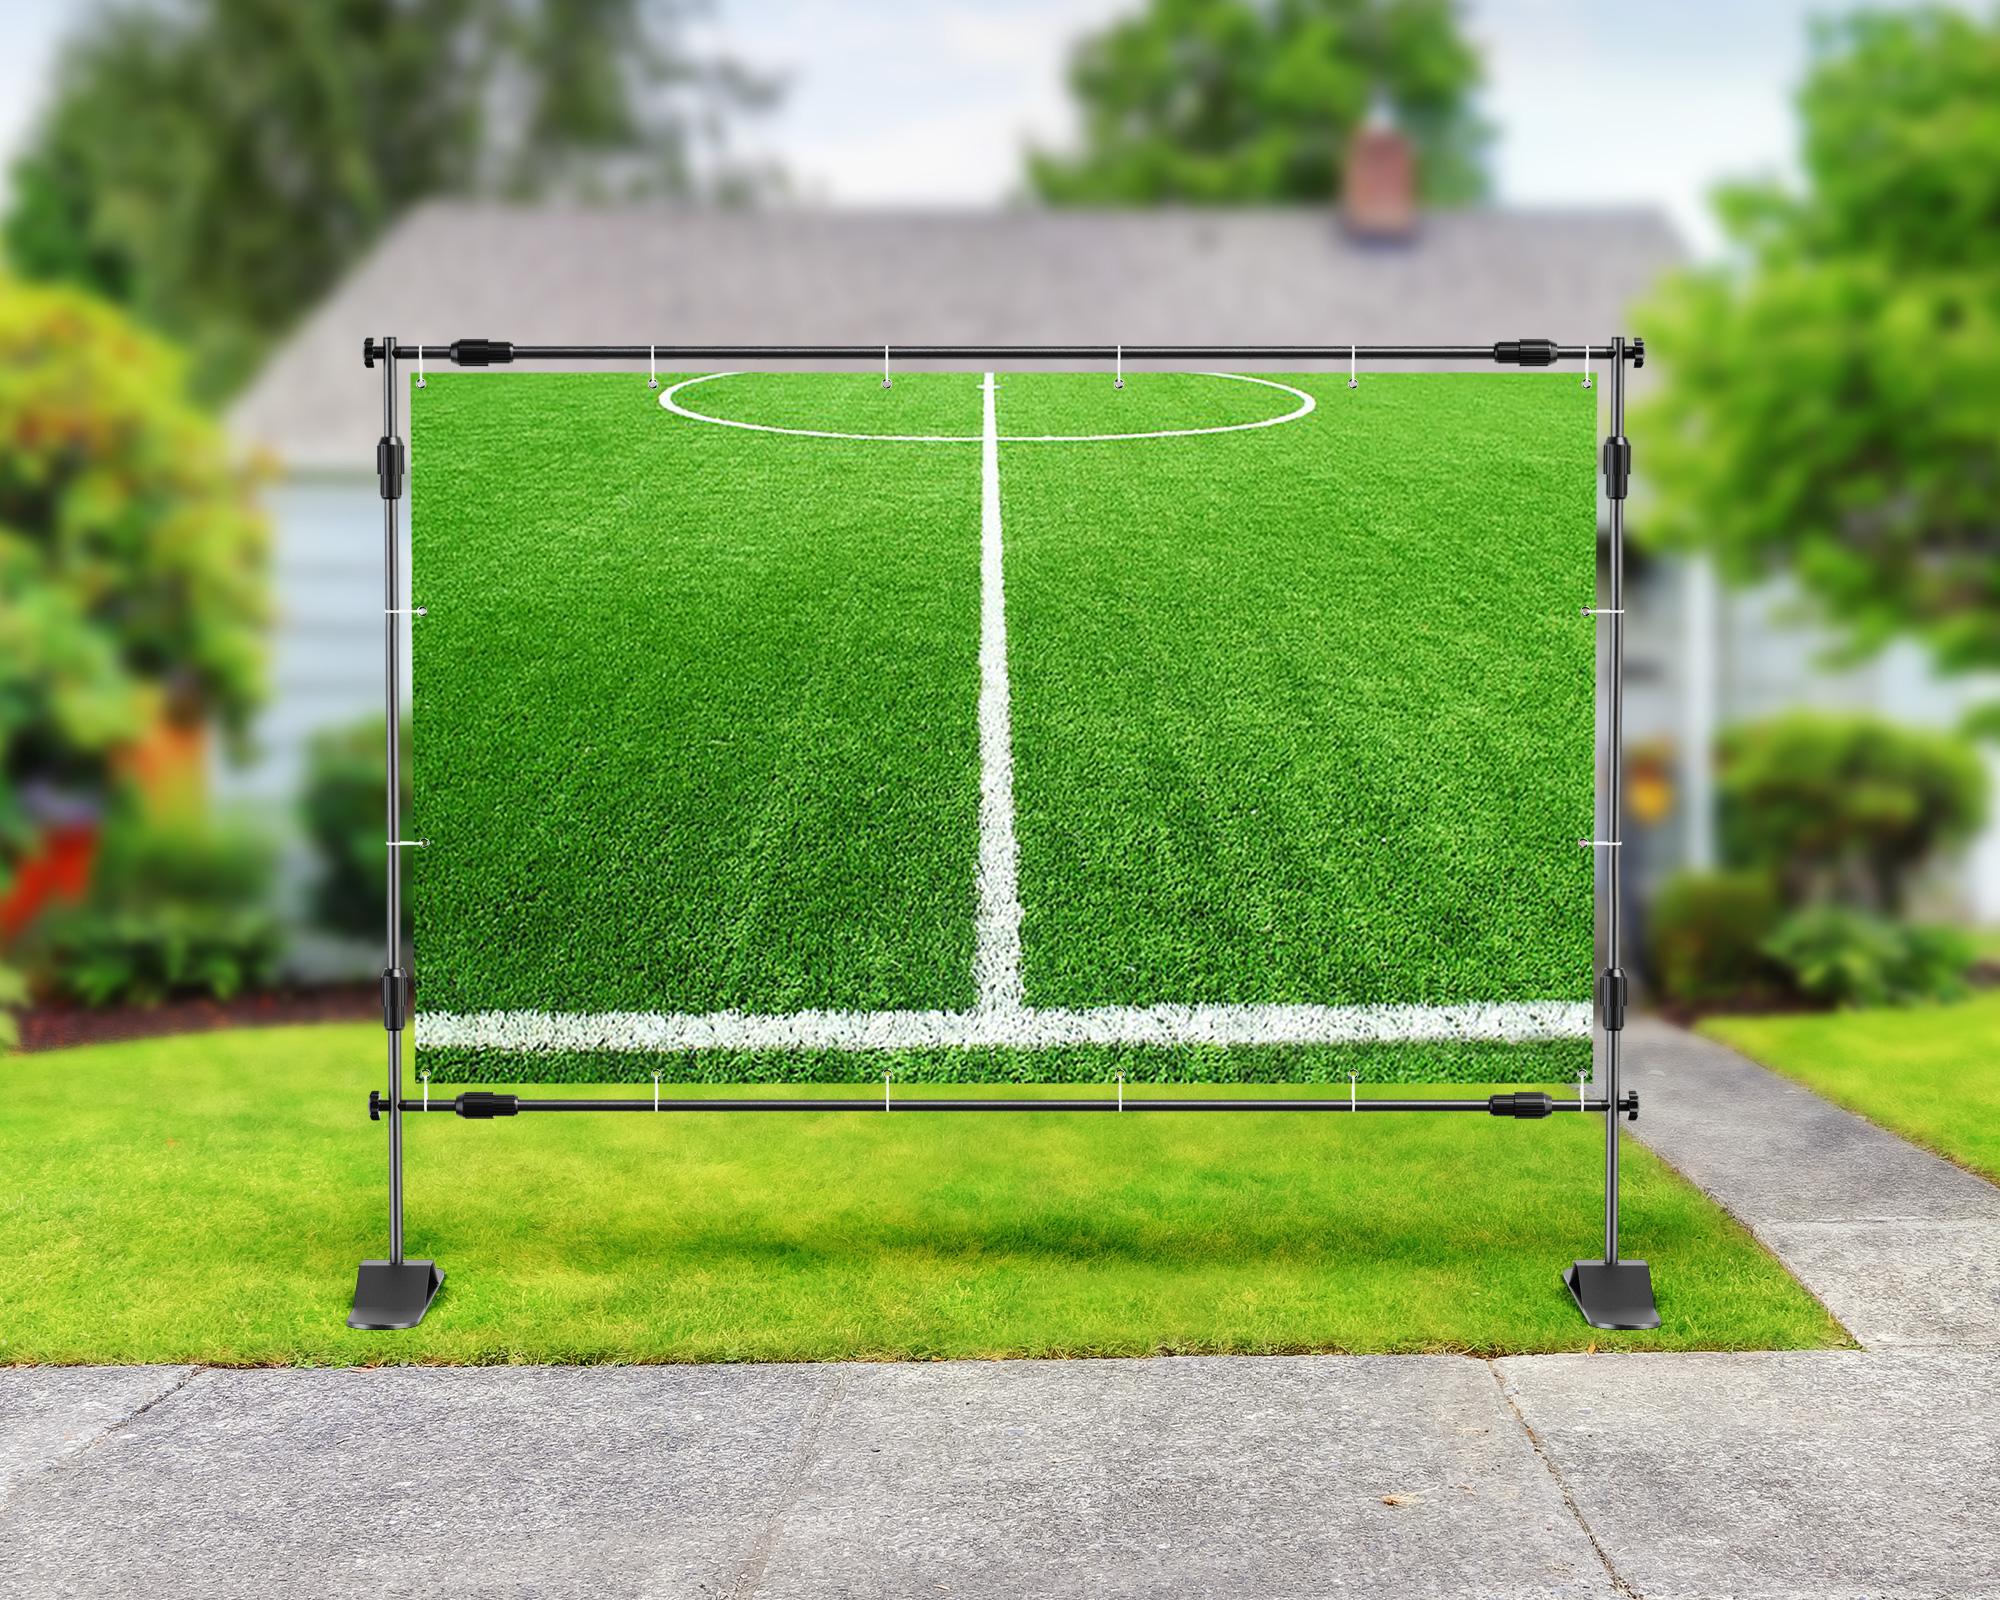 voetbal spandoek met voetbalveld als achtergrond